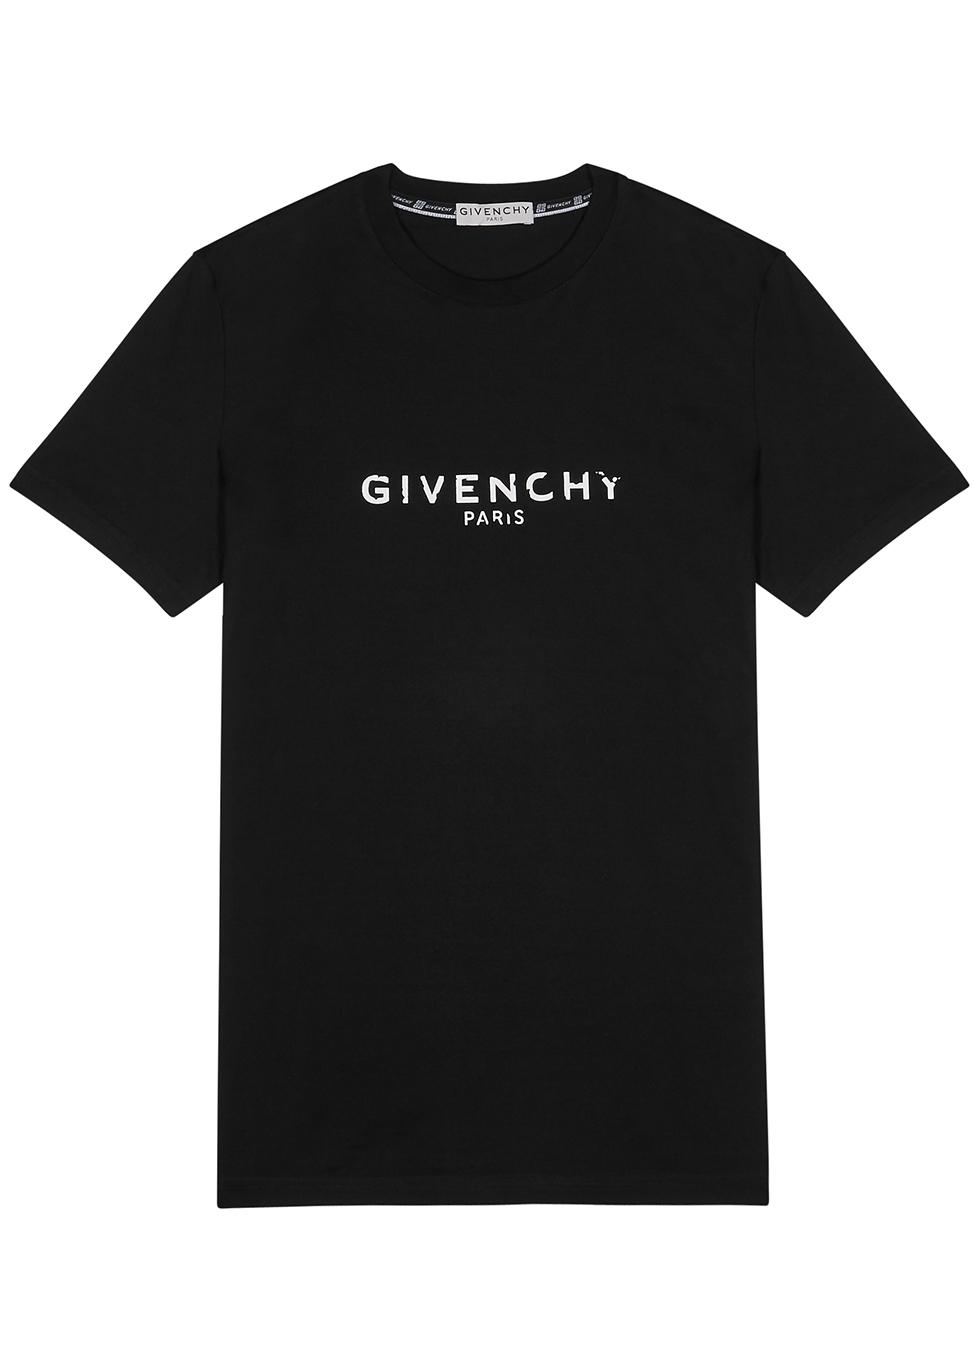 Givenchy Men's T-Shirts - Harvey Nichols